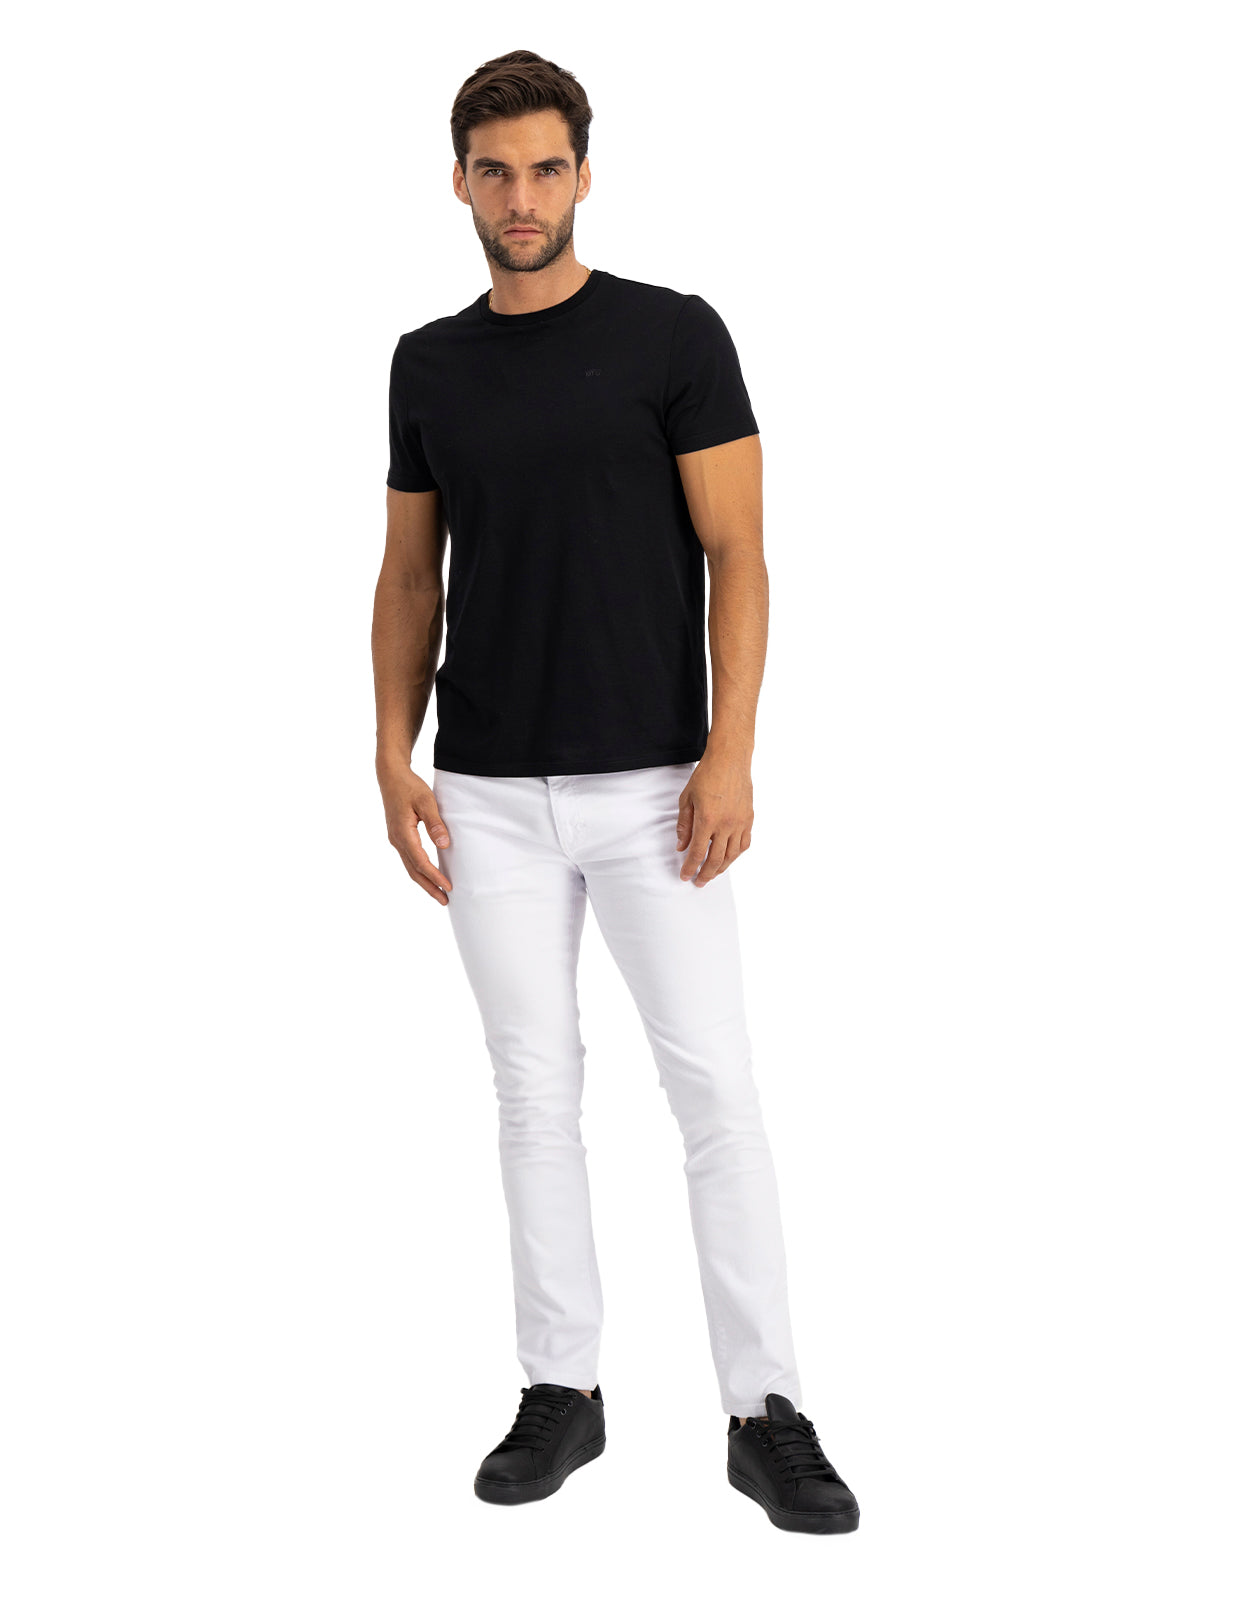 Jeans de Mezclilla Skinny - White Mercer Color Jeans